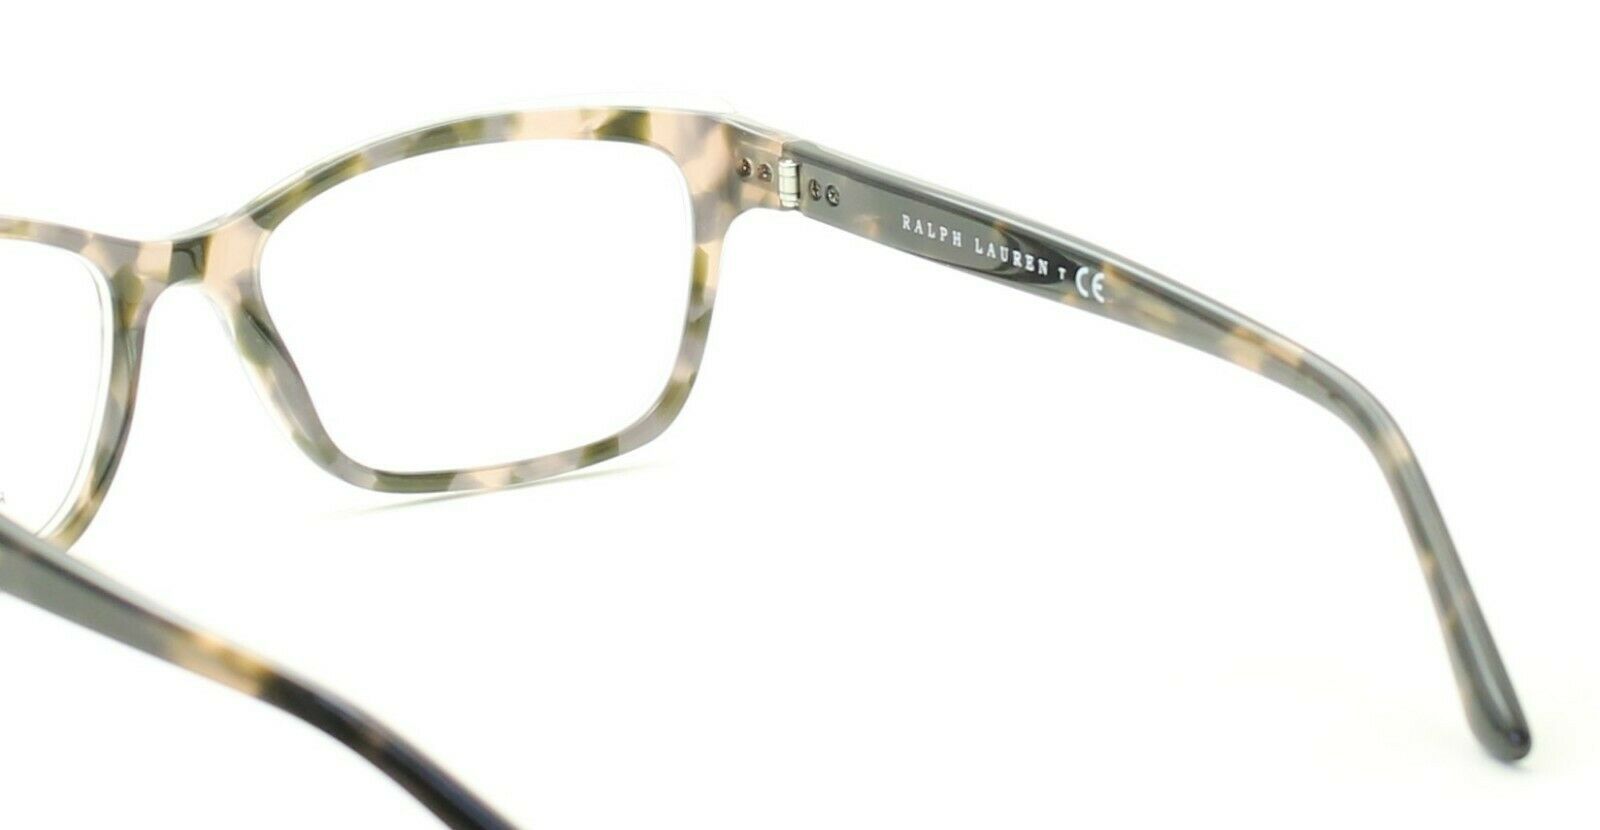 RALPH LAUREN RL 6169 5655 53mm RX Optical Eyewear FRAMES Eyeglasses Glasses -New